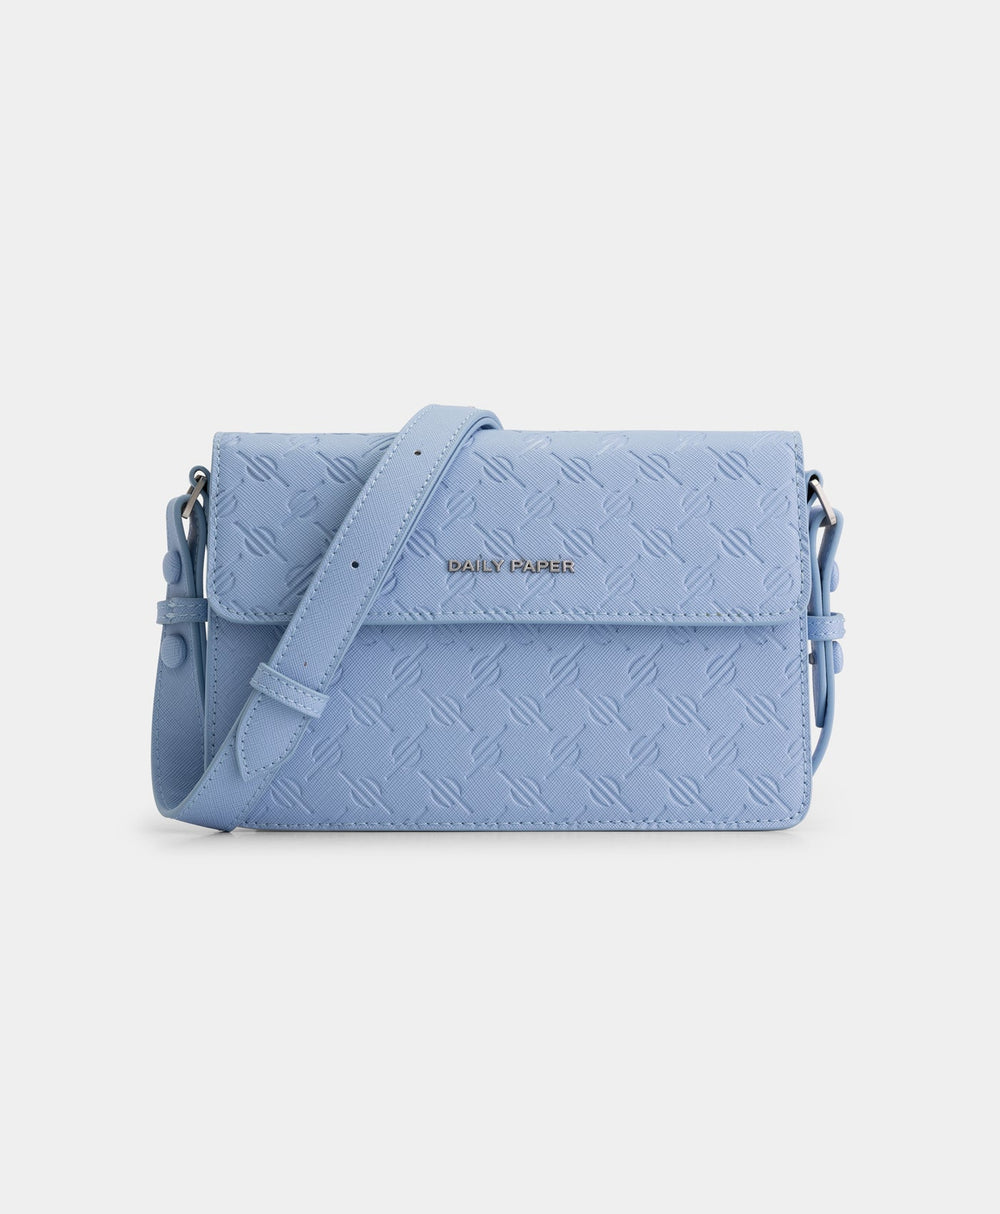 DP - Baby Blue Meru Monogram Bag - Packshot - Front 